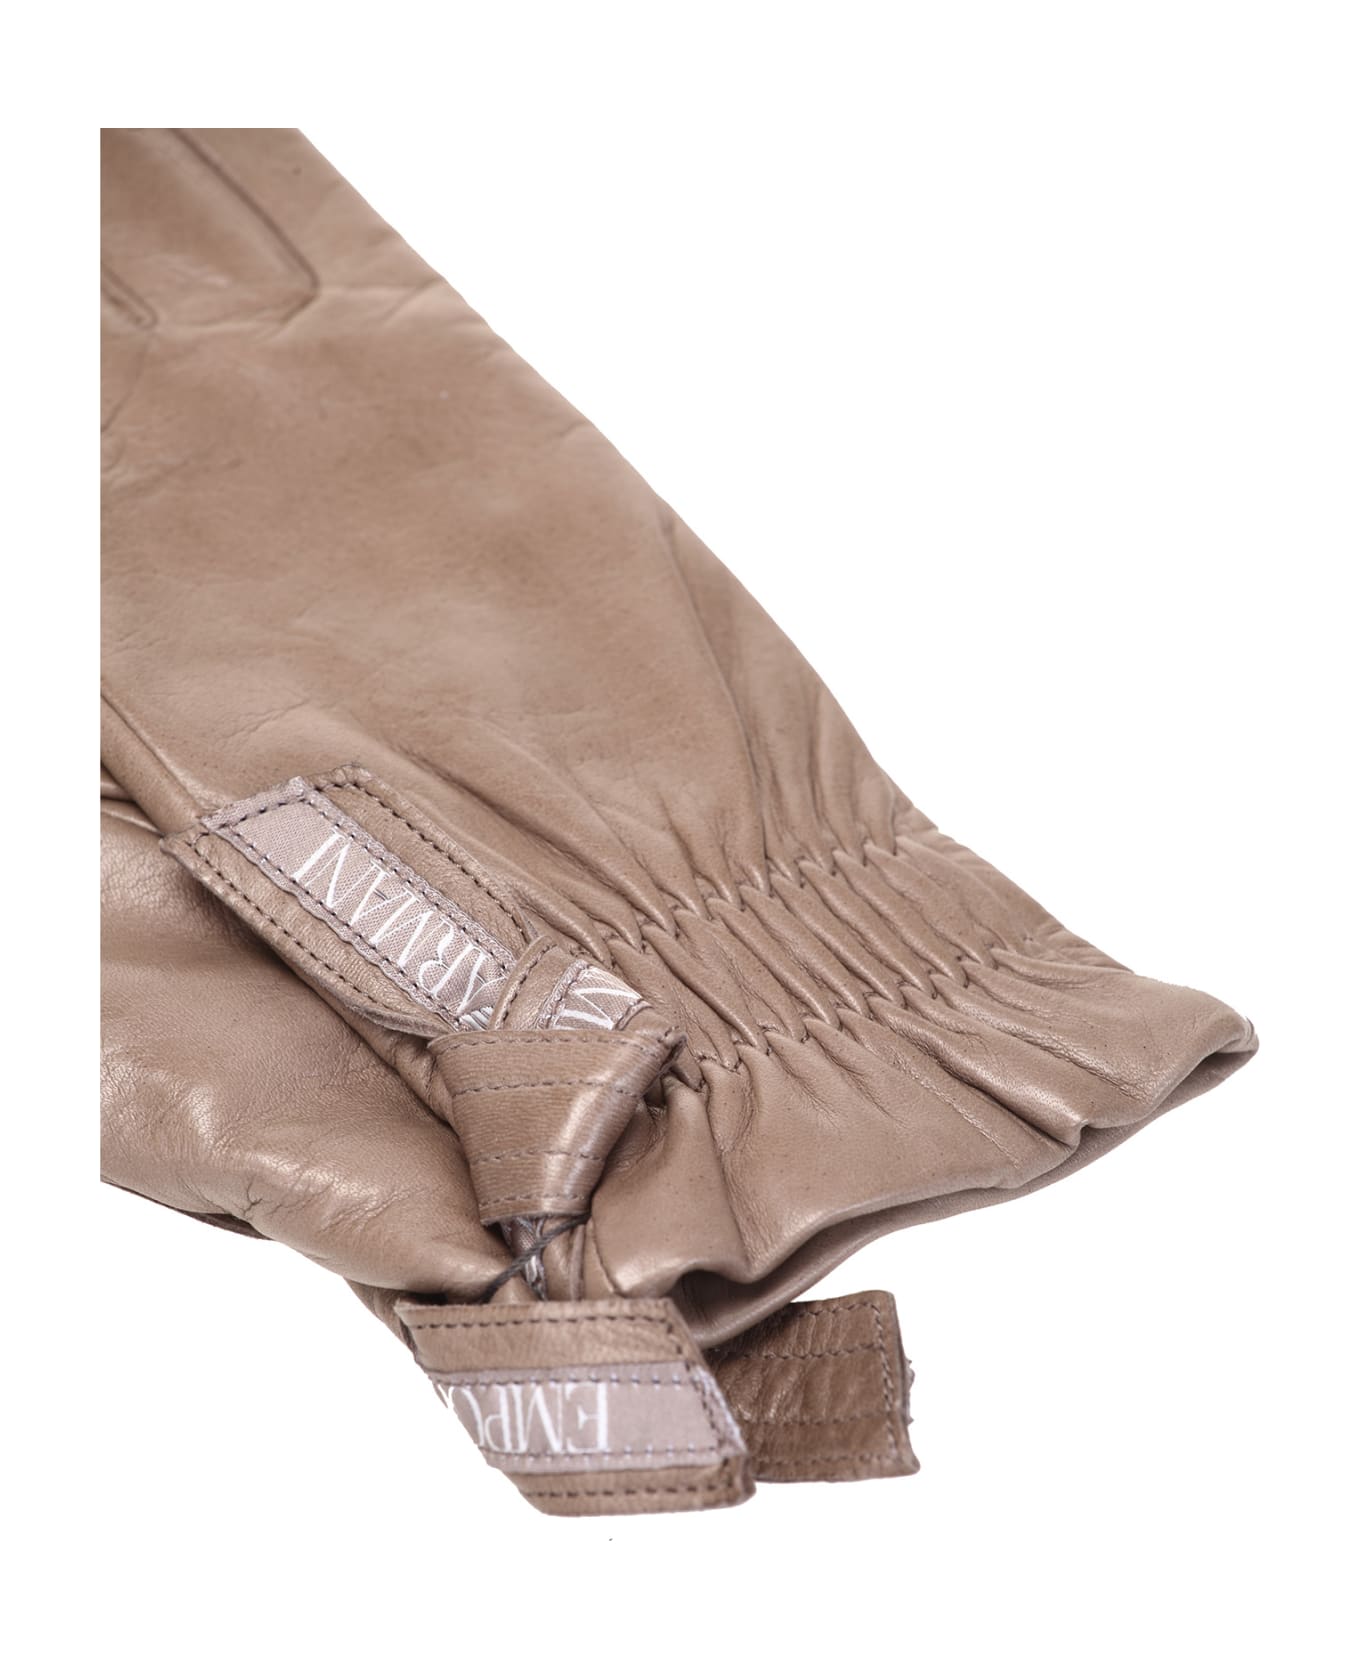 Emporio Armani Leather gloves - Tortora